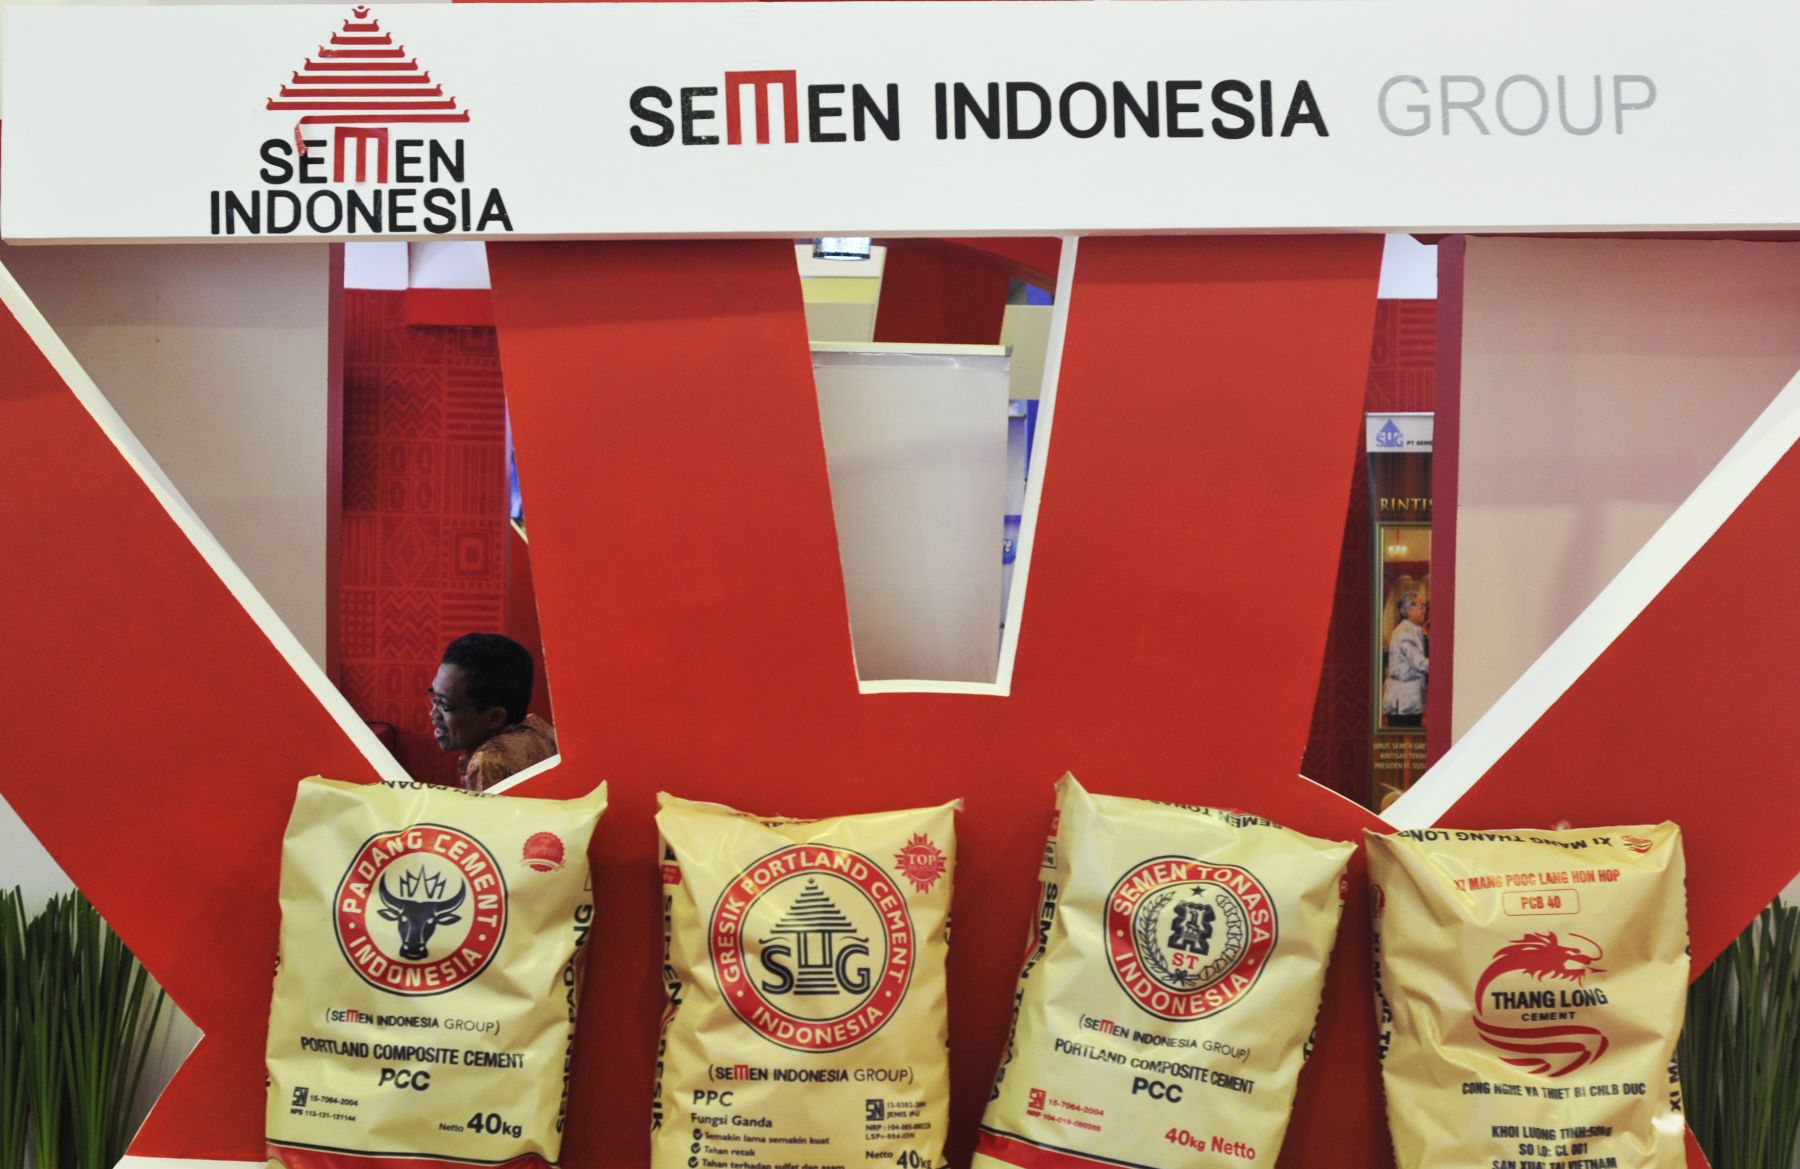 Semen Indonesia Group